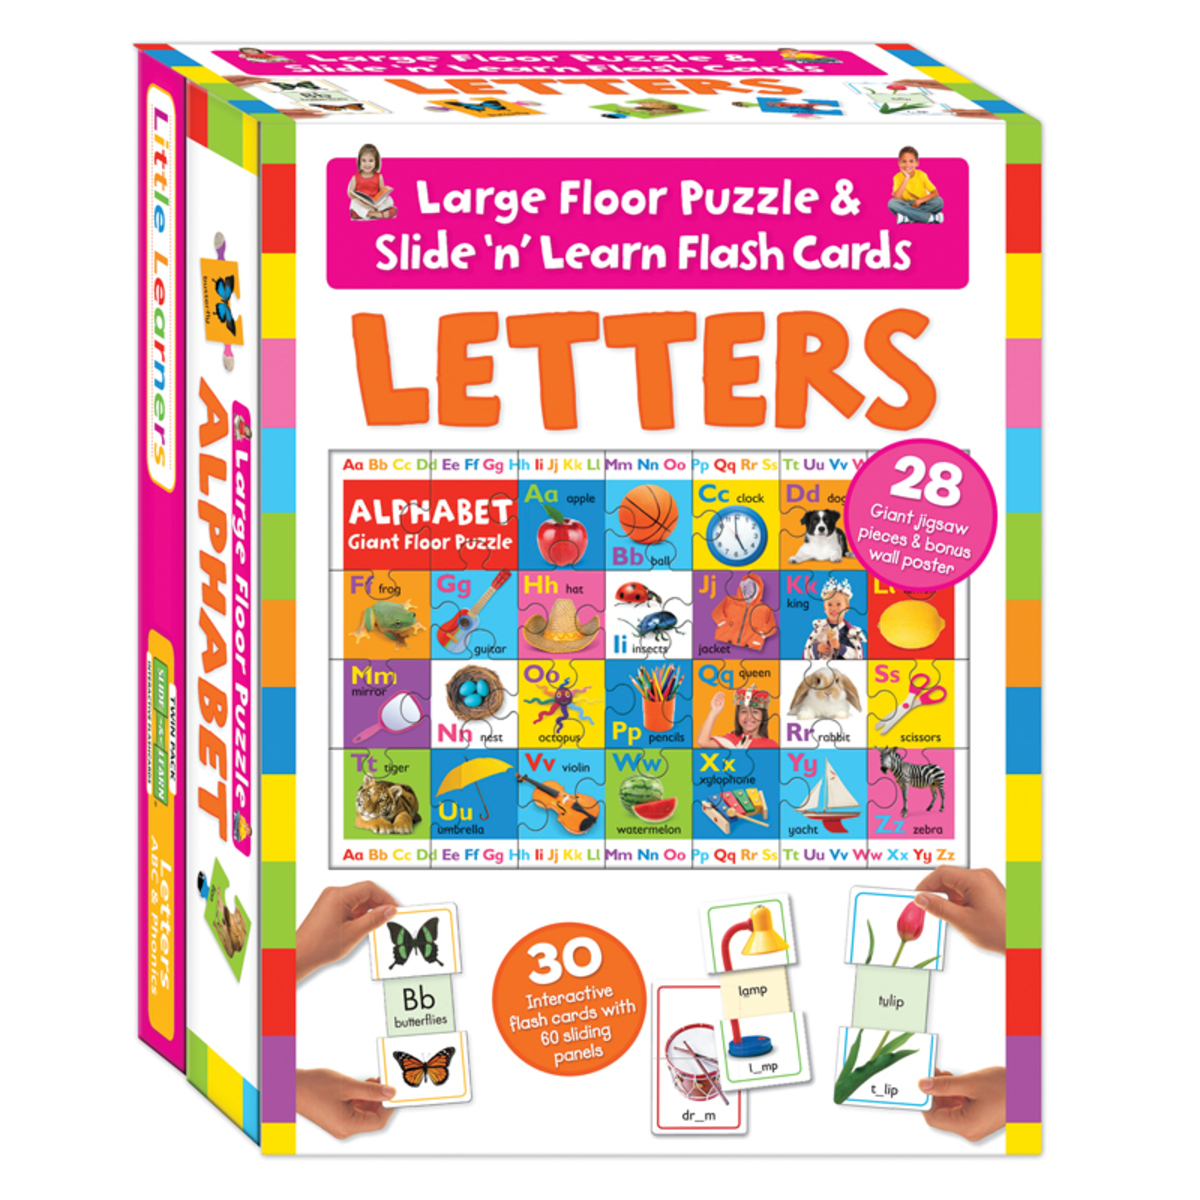 Slide 'n' Learn Words Flash Cards + Large Floor Puzzle